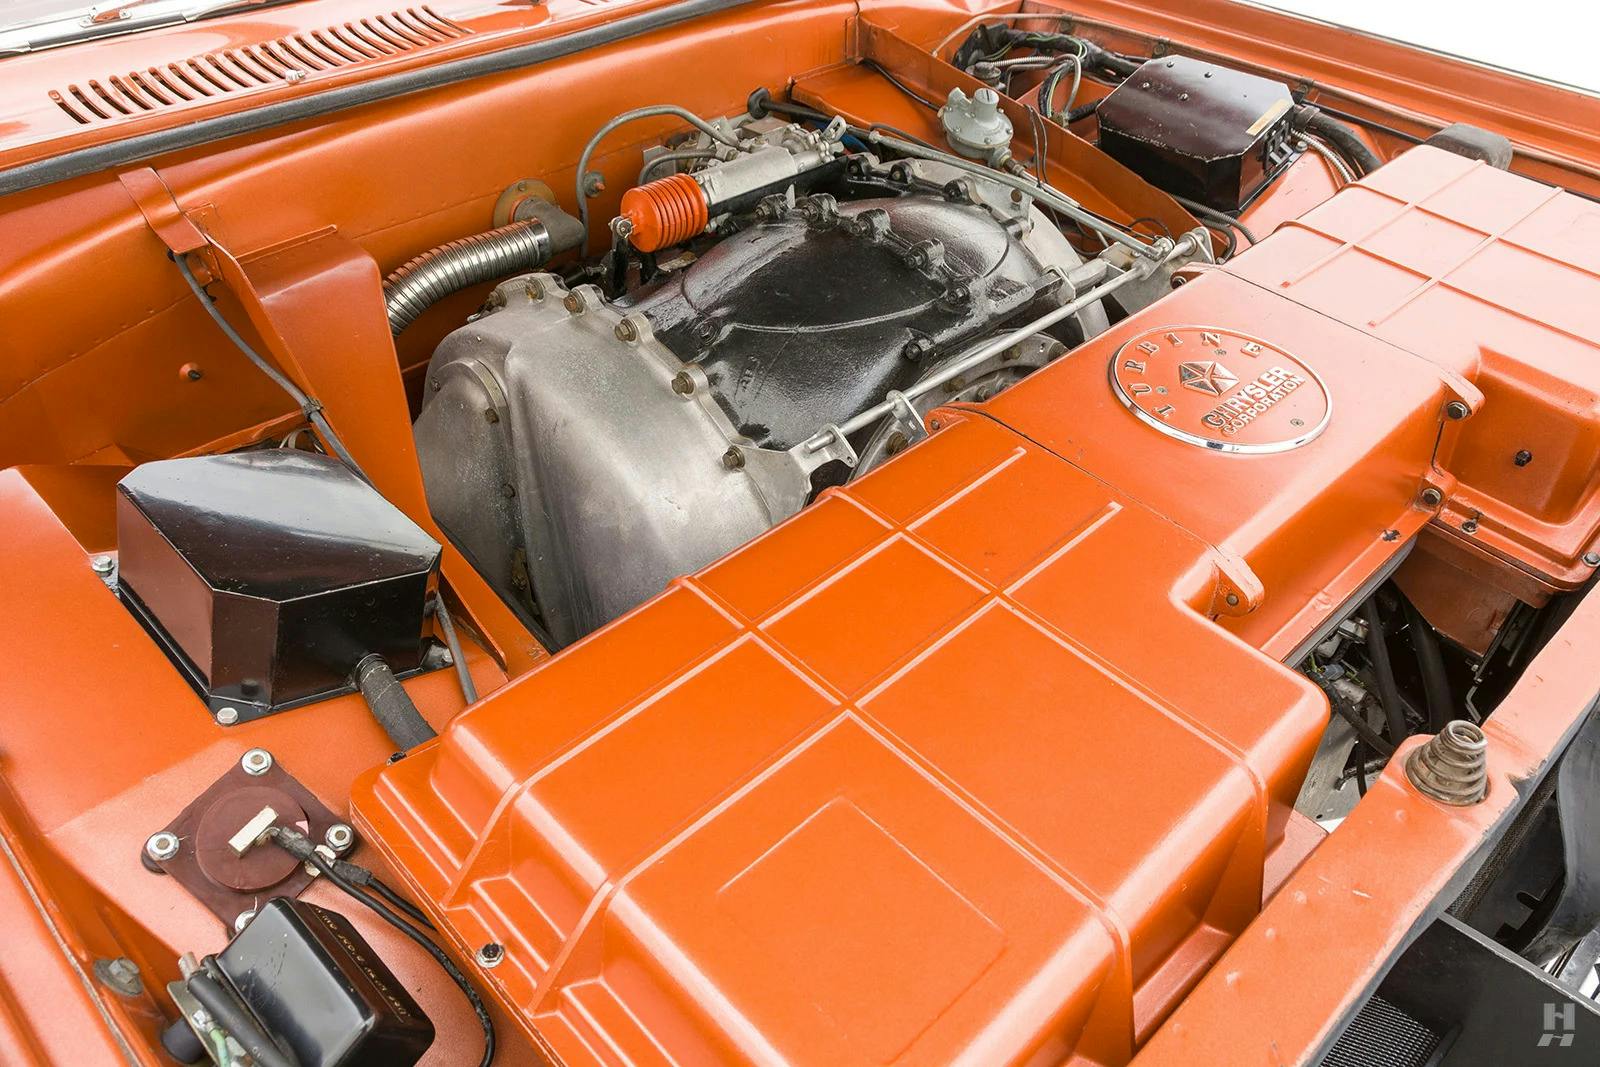 1963 Chrysler Turbine Car engine bay